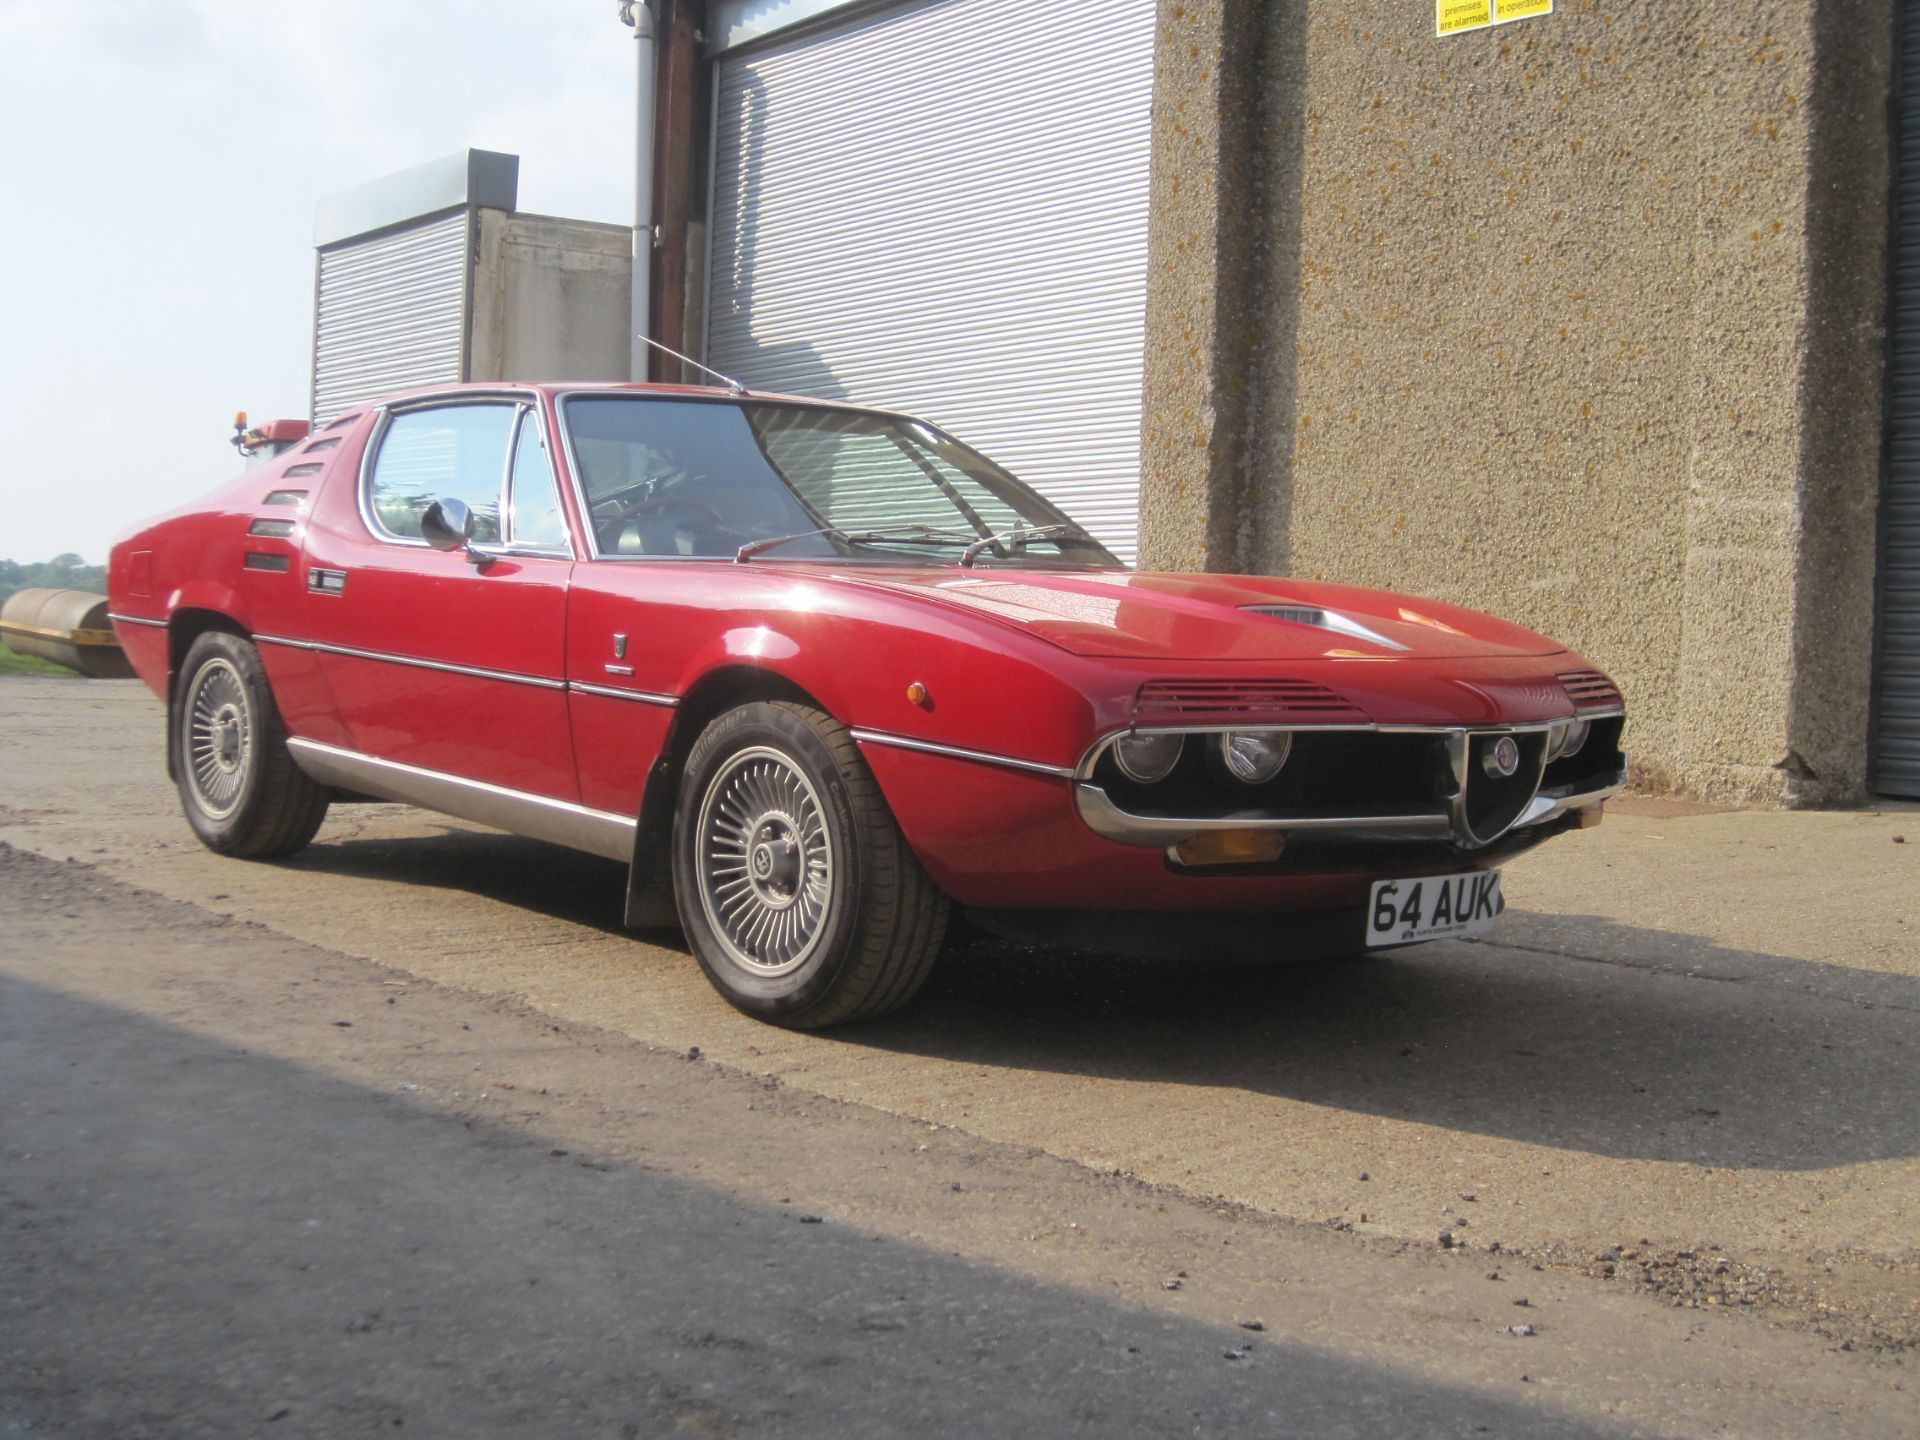 1976 2,589cc Alfa Romeo Montreal (Right Hand Drive) Reg. No. 64 AUK Chassis No. AR-1440171 Engine - Image 3 of 13